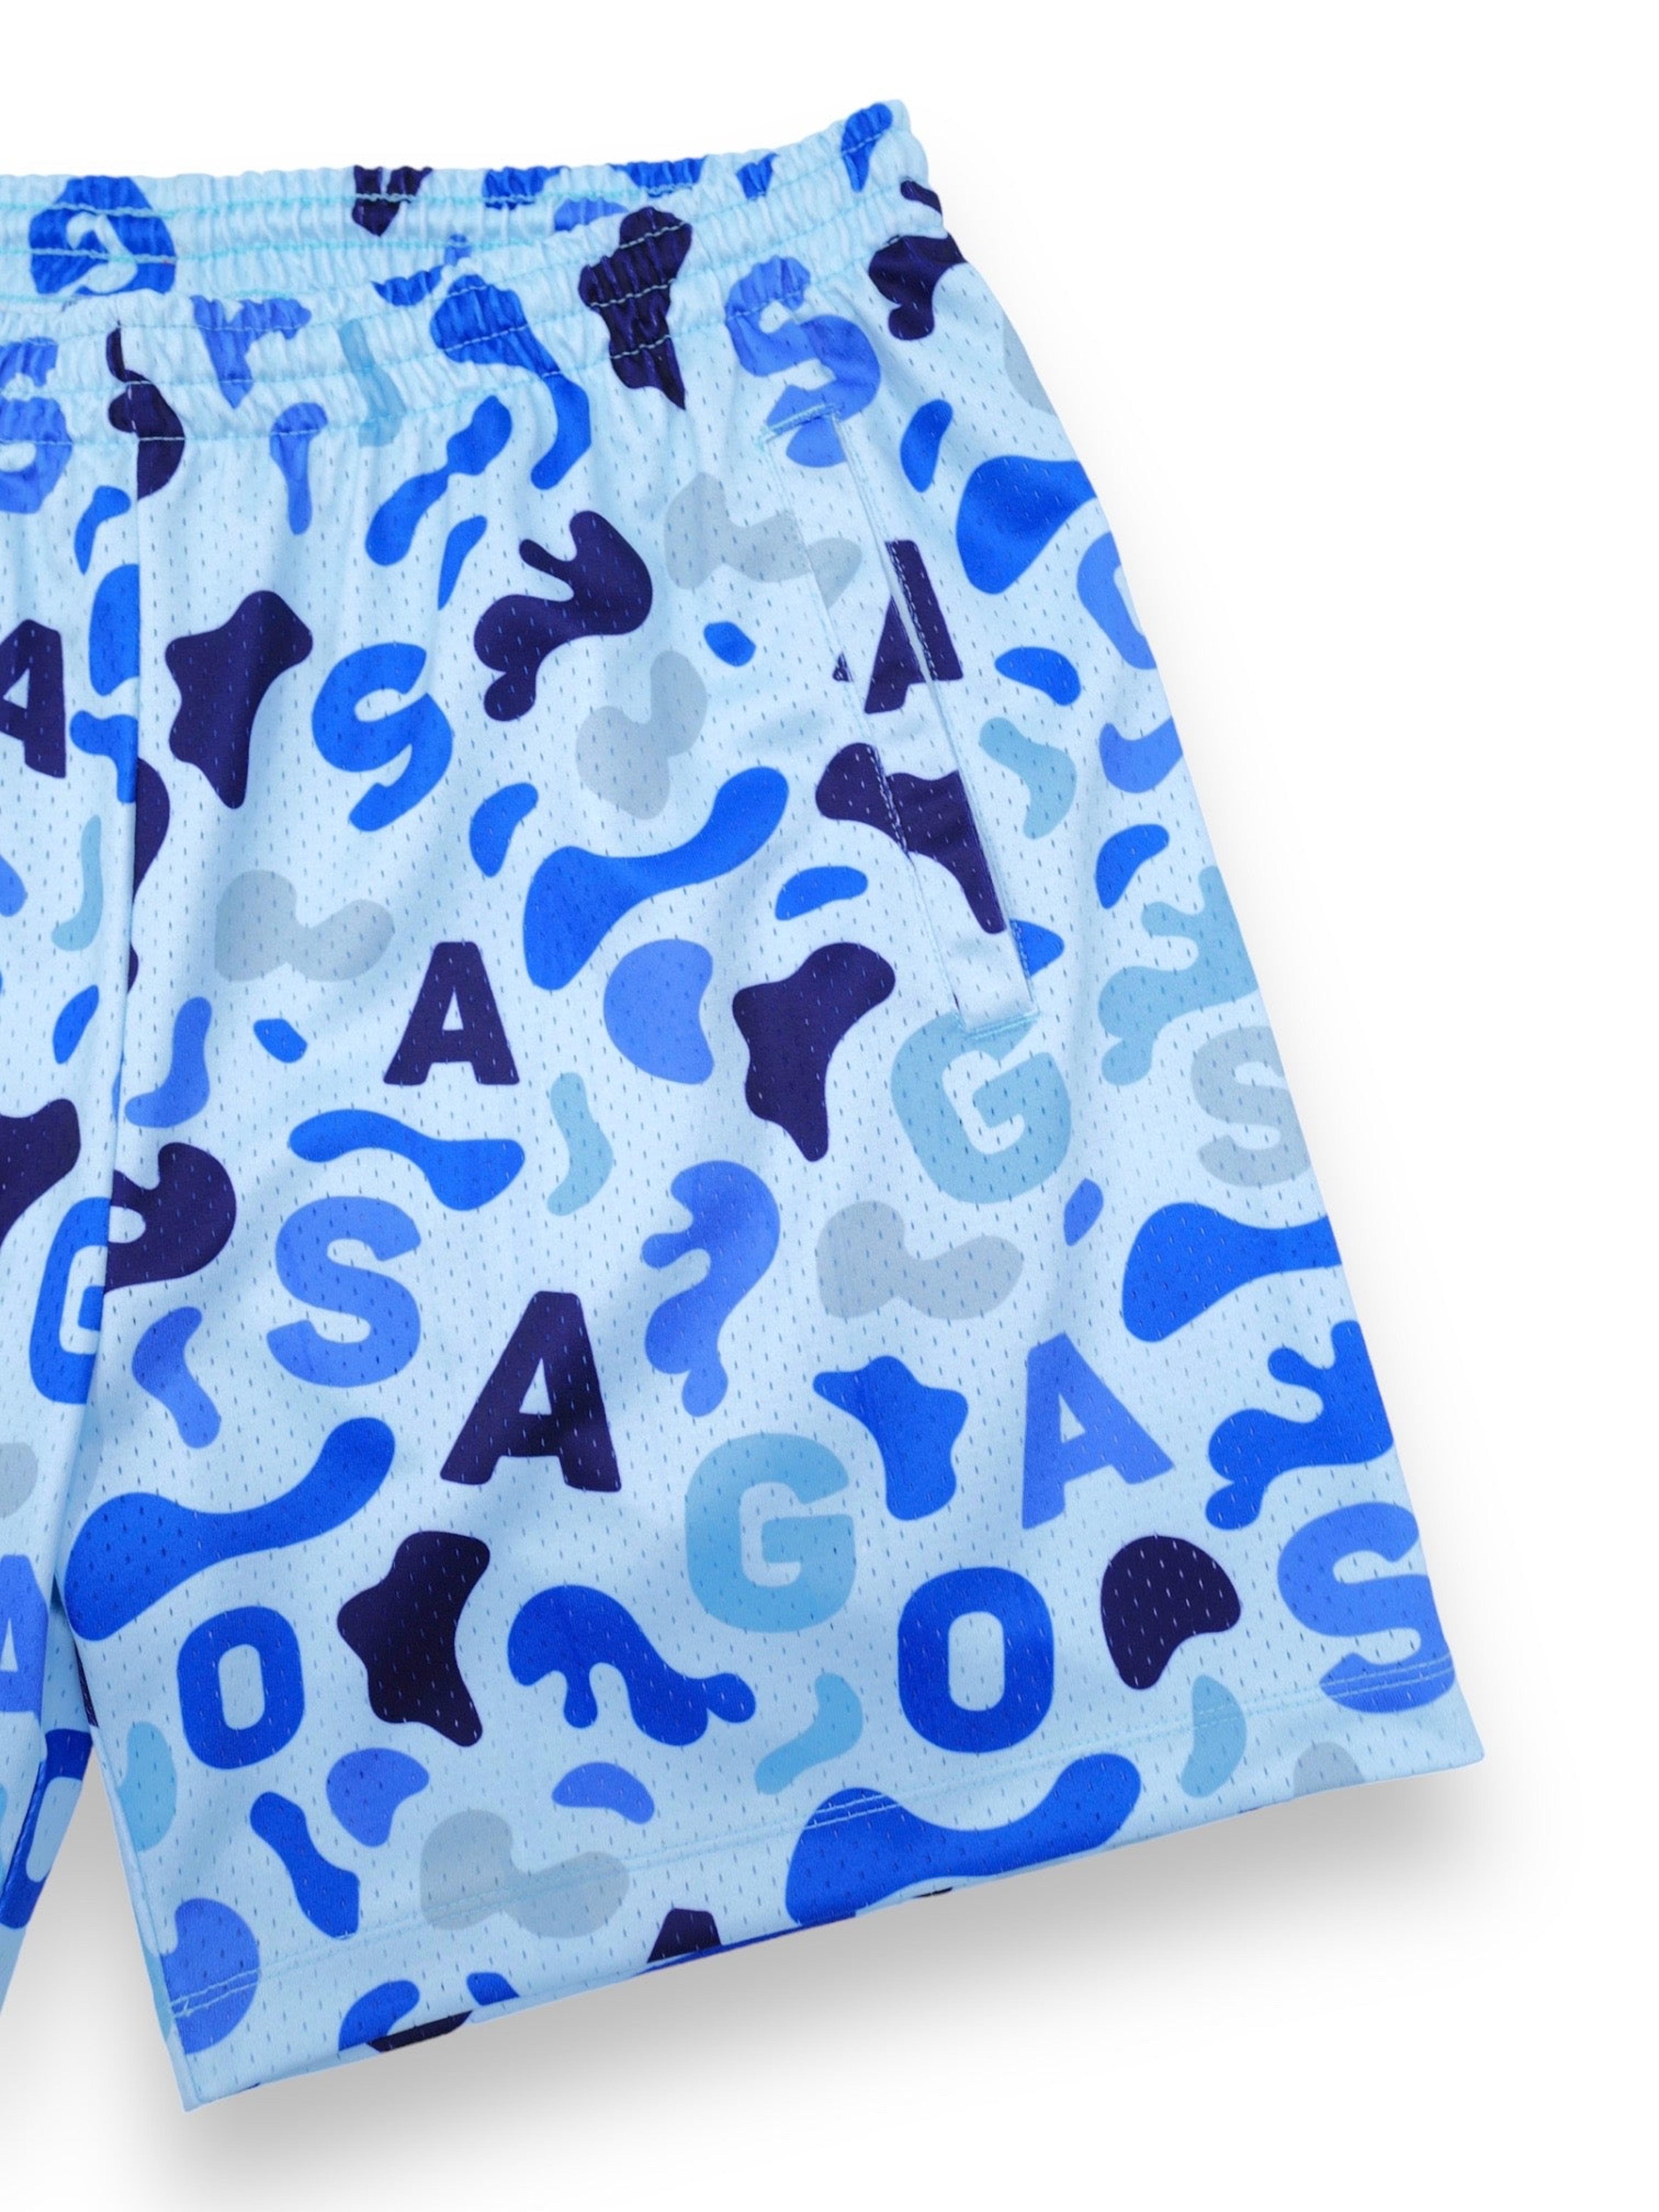 Alternate View 2 of Sago camo shorts (Blue)X